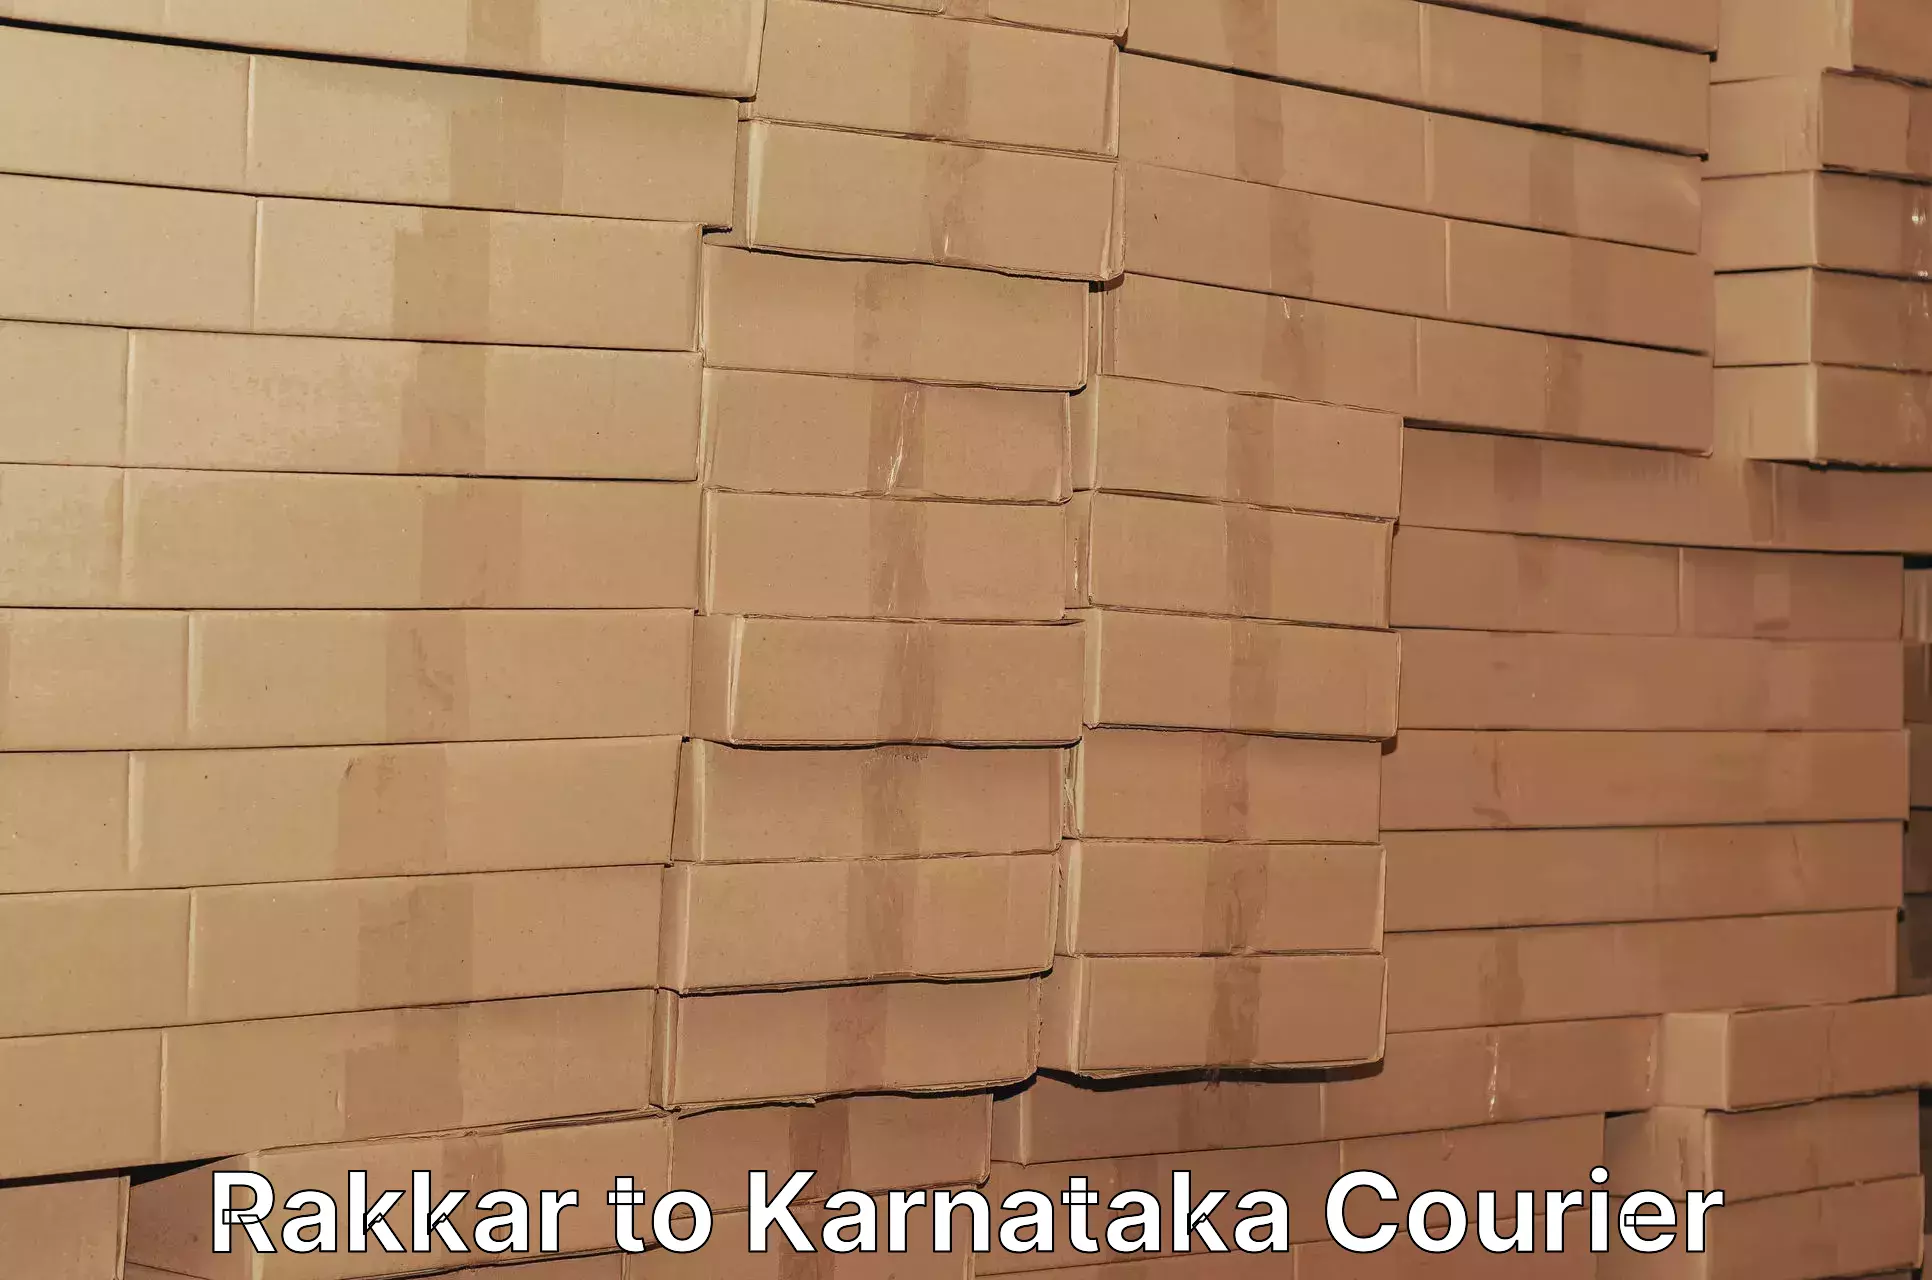 Reliable delivery network Rakkar to Karnataka